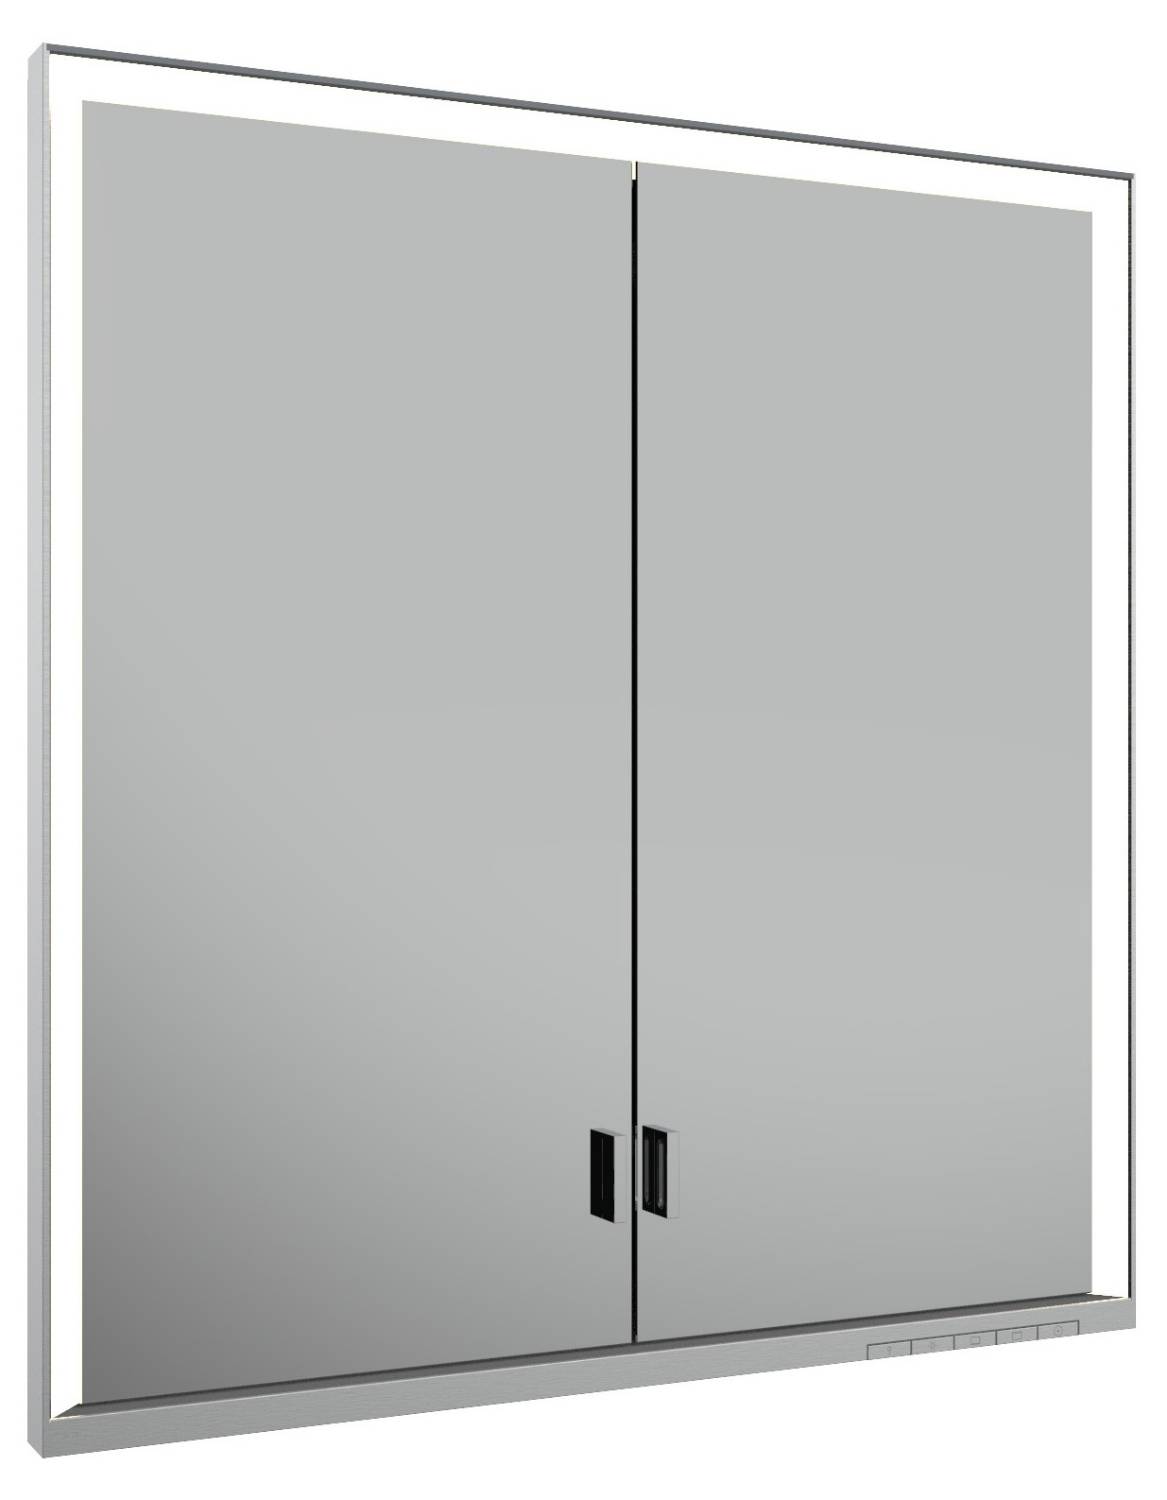 Bathroom Mirror Cabinet - (2 Door) with Lighting - Recessed & Wall Mounted options - ROYAL LUMOS - Mirror cabinet